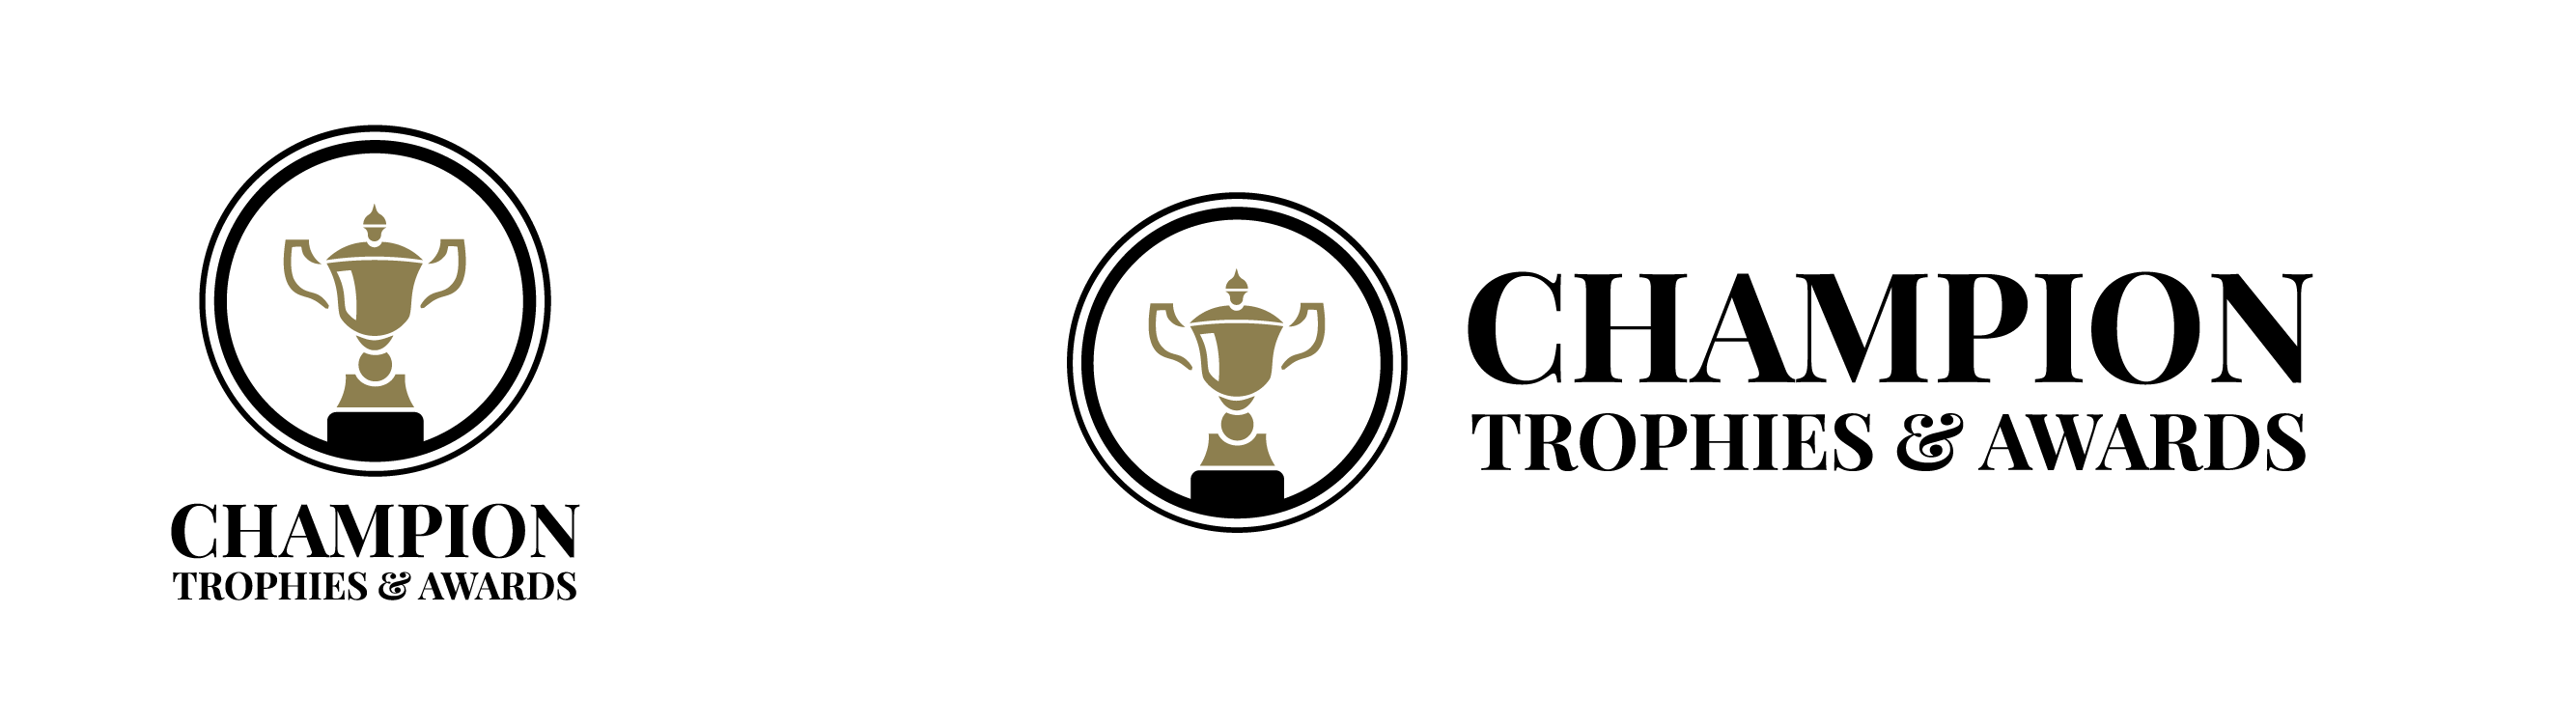 Champion Trophies and Awards regular logo and landscape logo